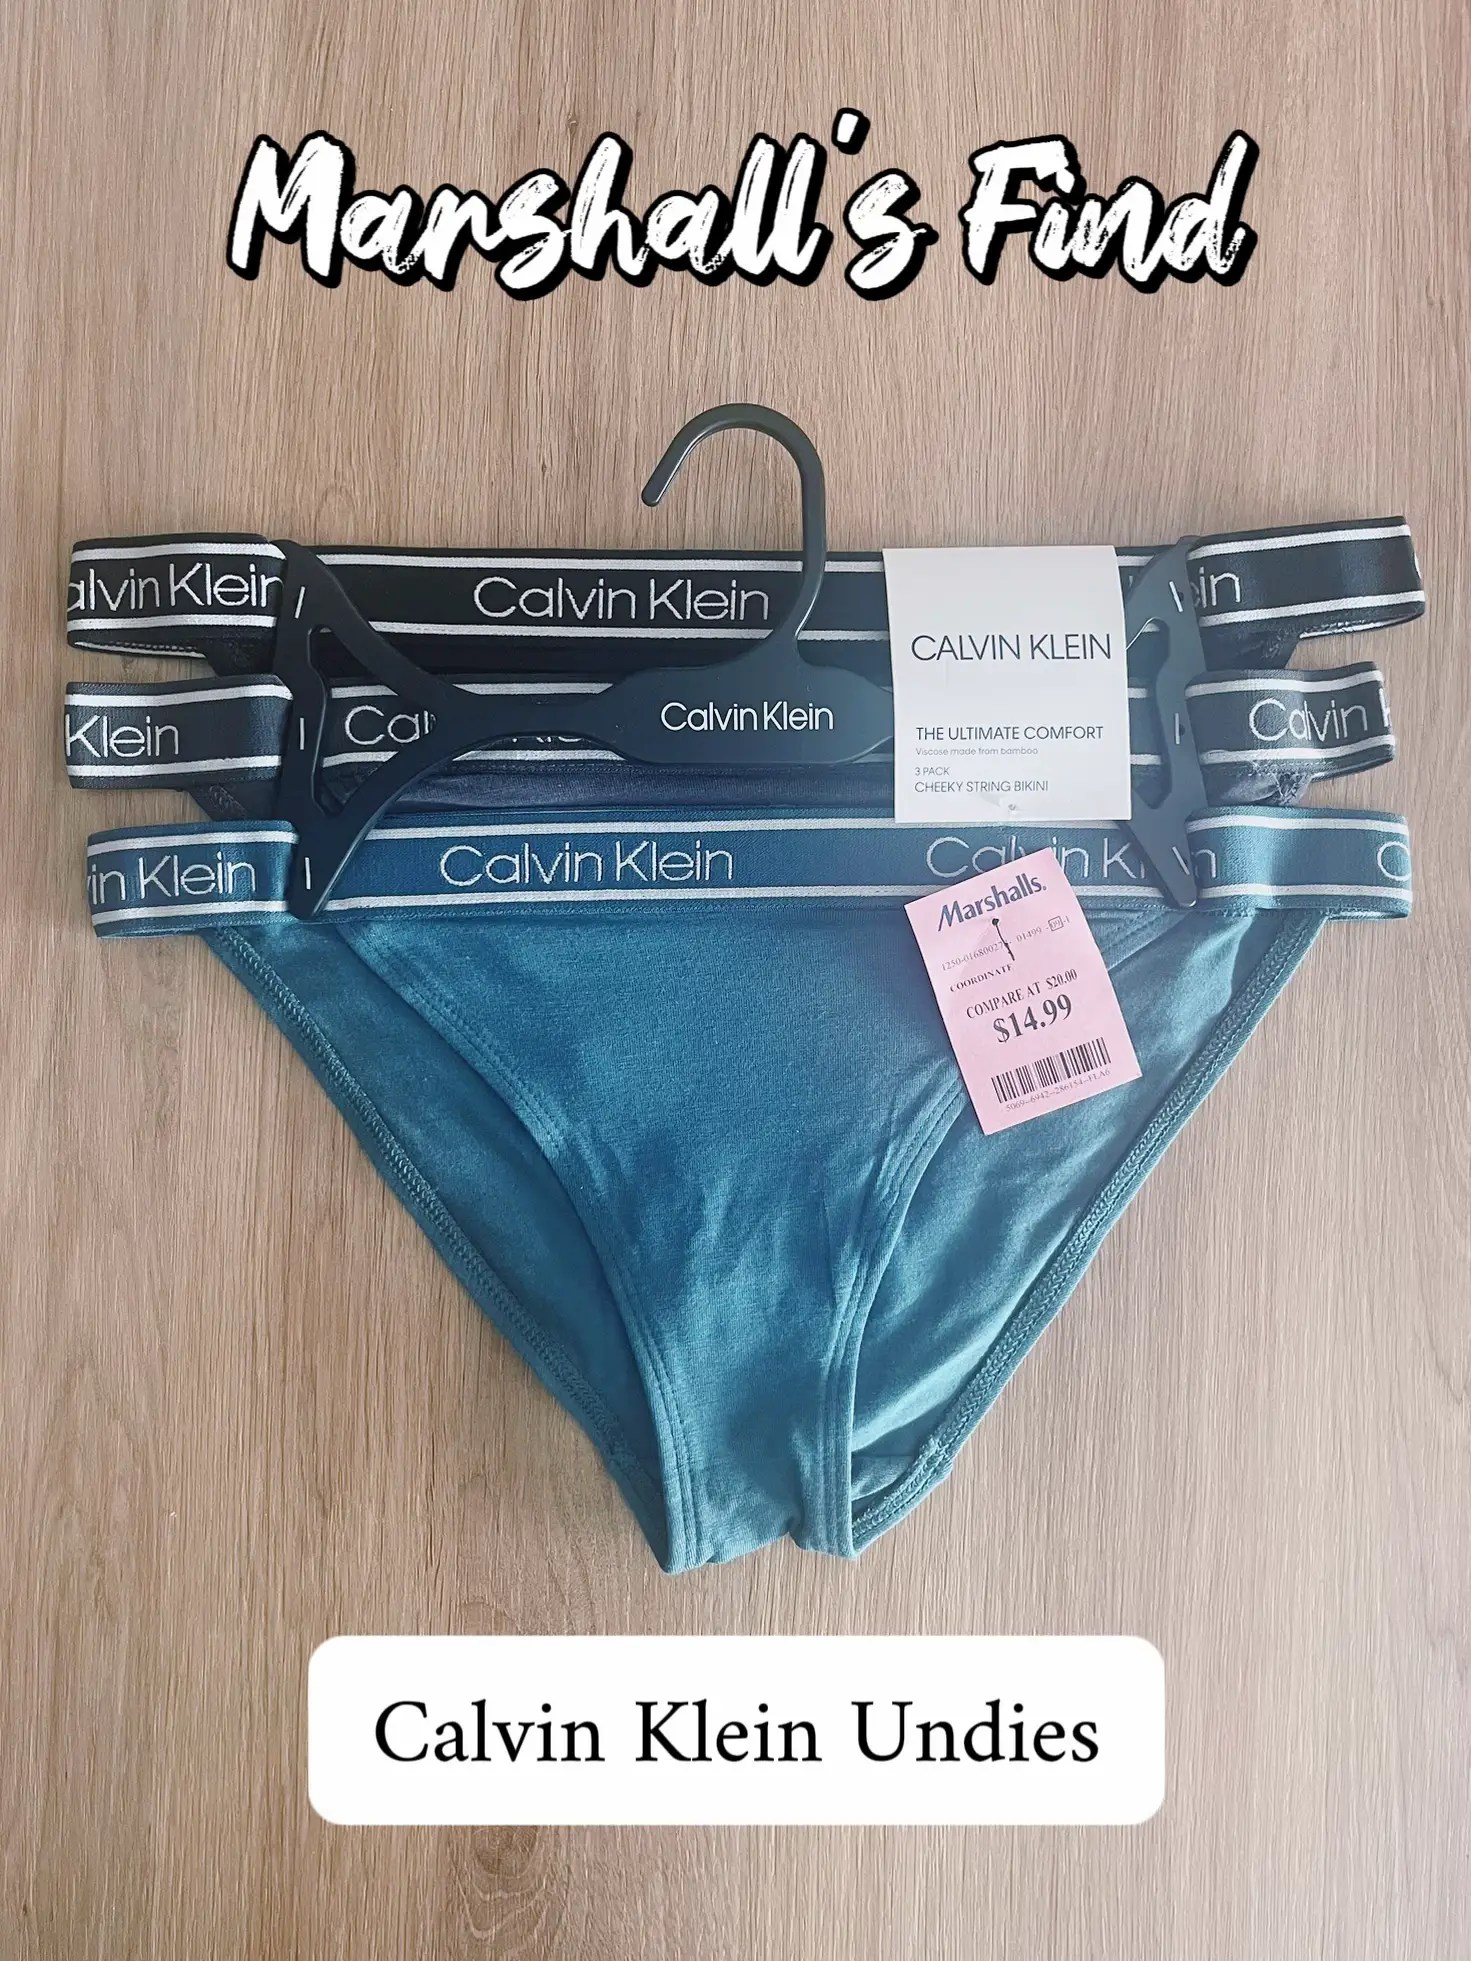 Danskin Underwear Underpants Girls 3 pack Boyshorts Mint Peach New